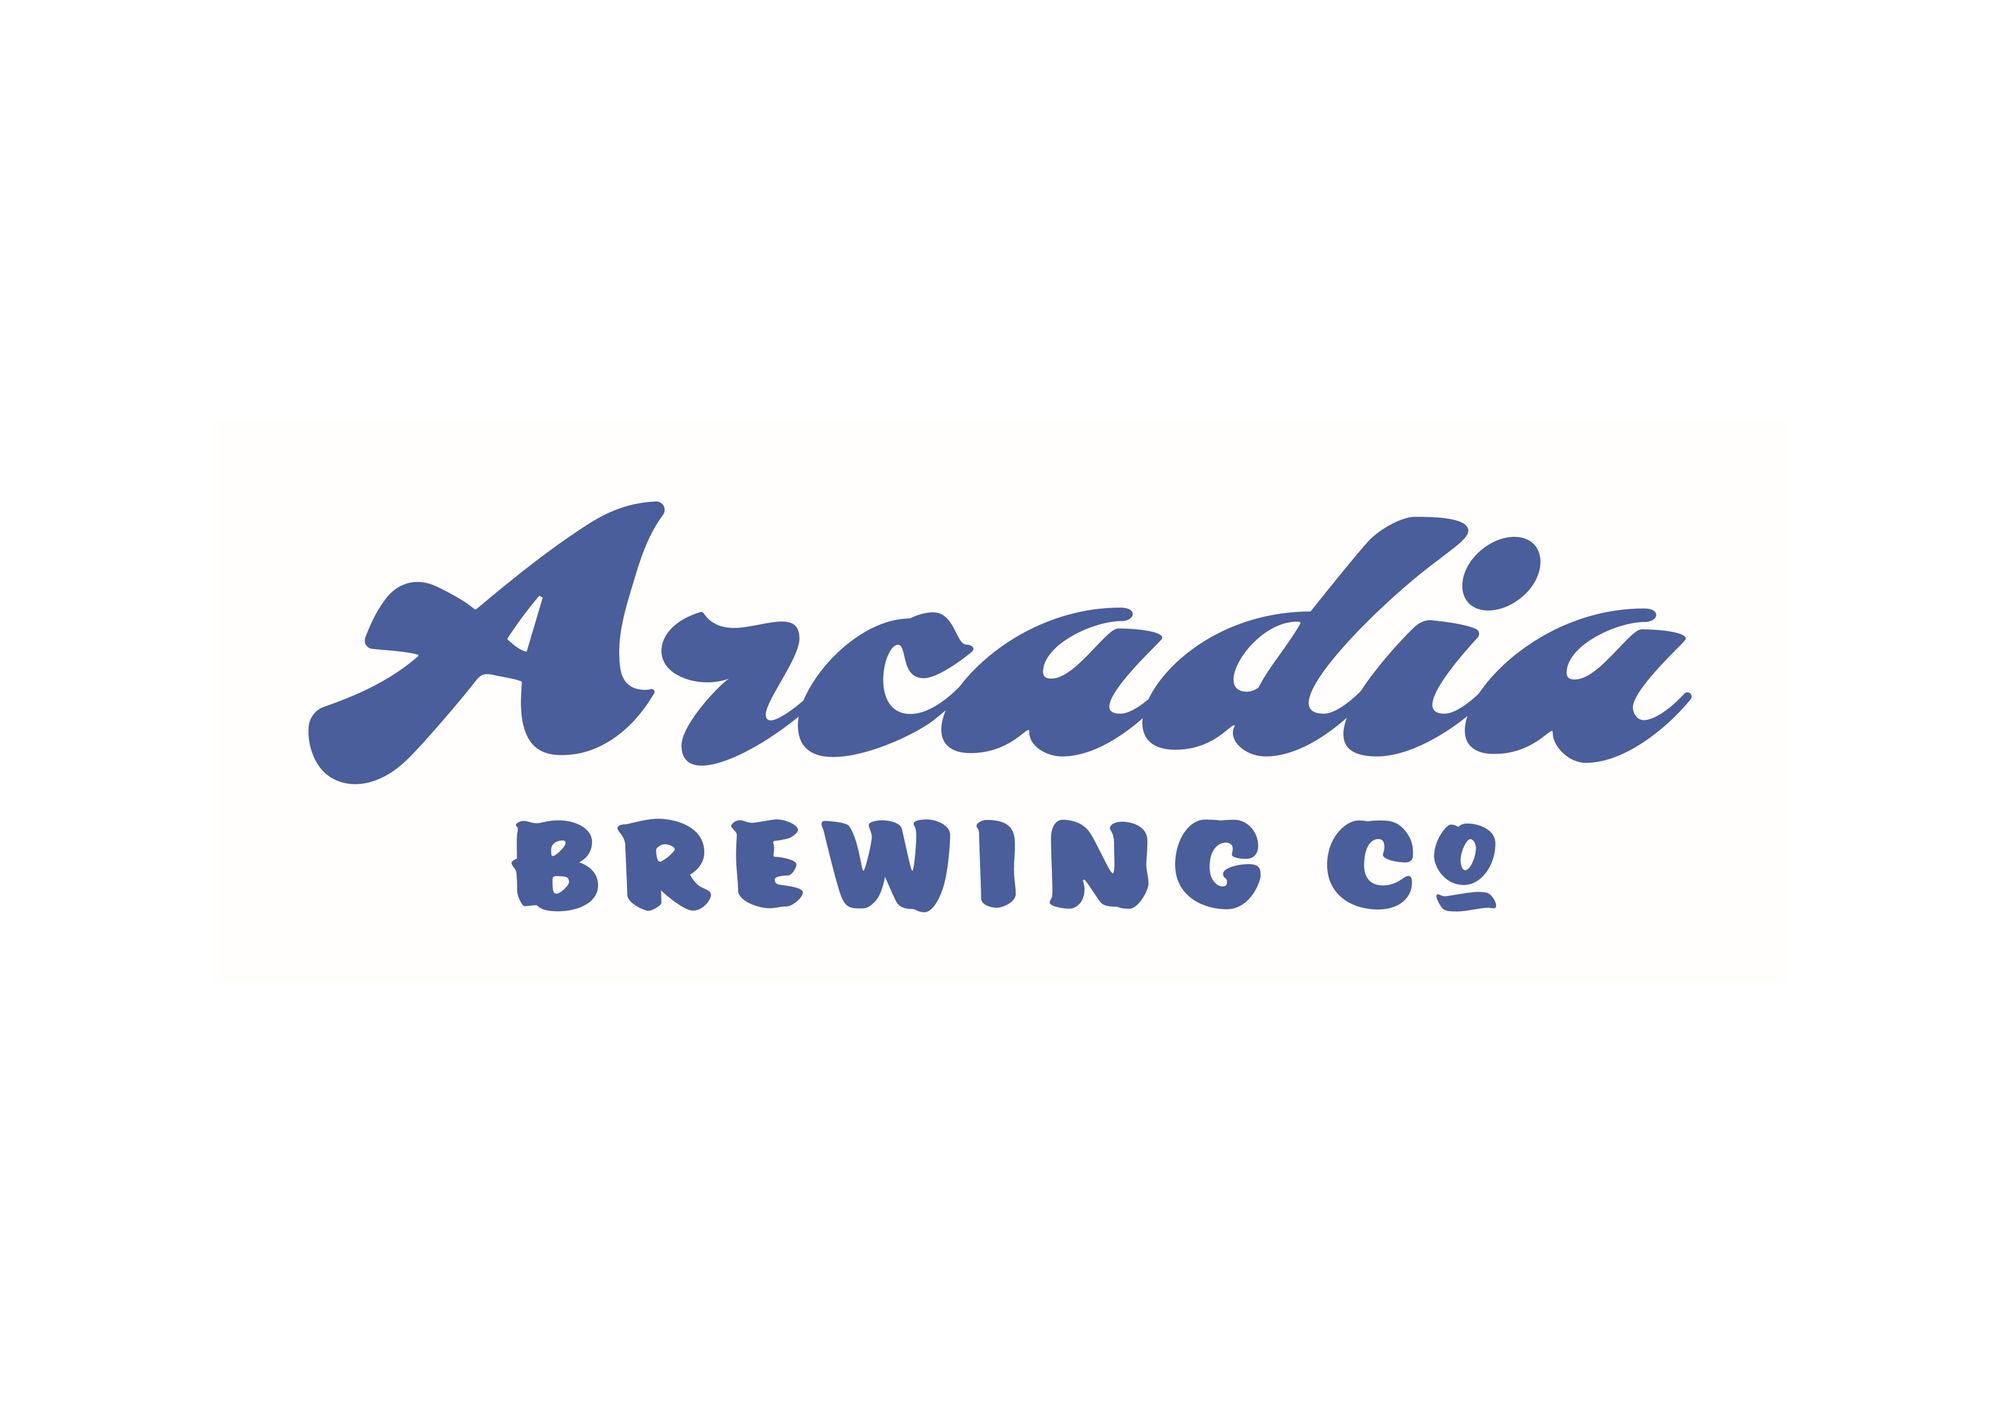 Bringing People Together Through Beer - Arcadia Brewing Co.